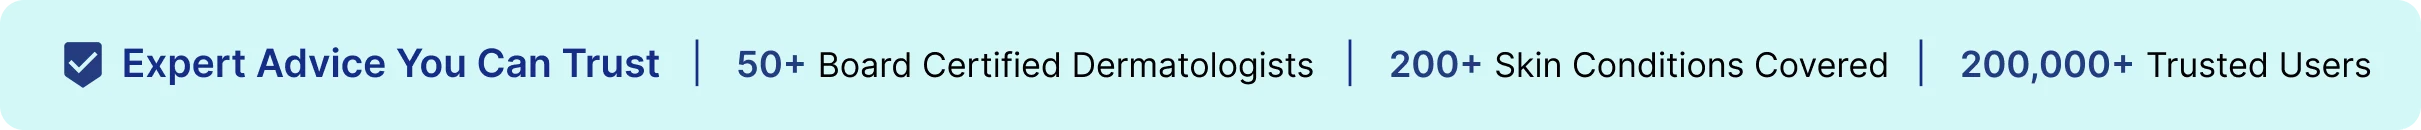 online dermatologist badge